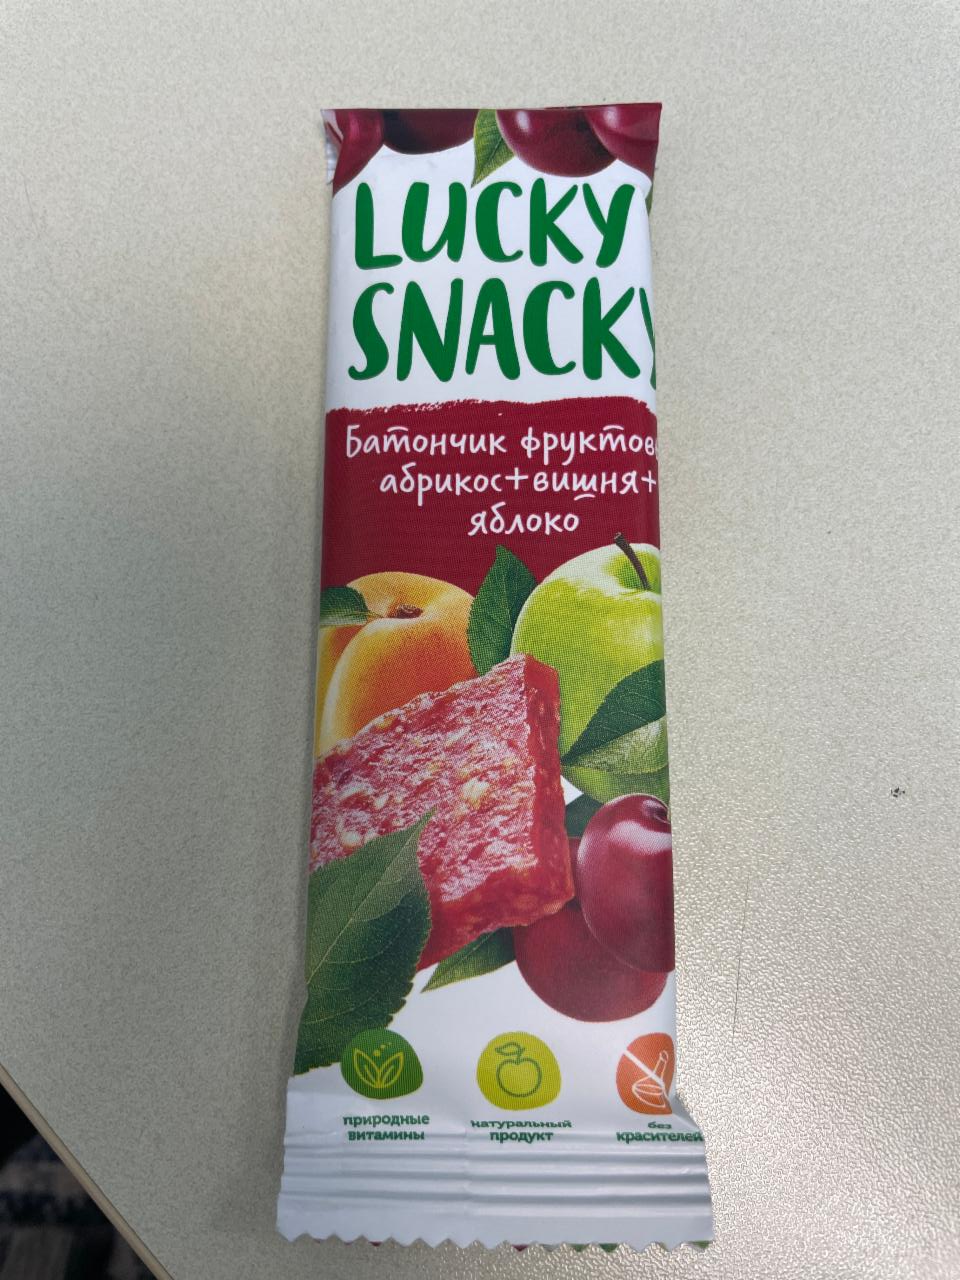 Фото - Батончик фруктовый абрикос+вишня+яблоко Lucky Snacky